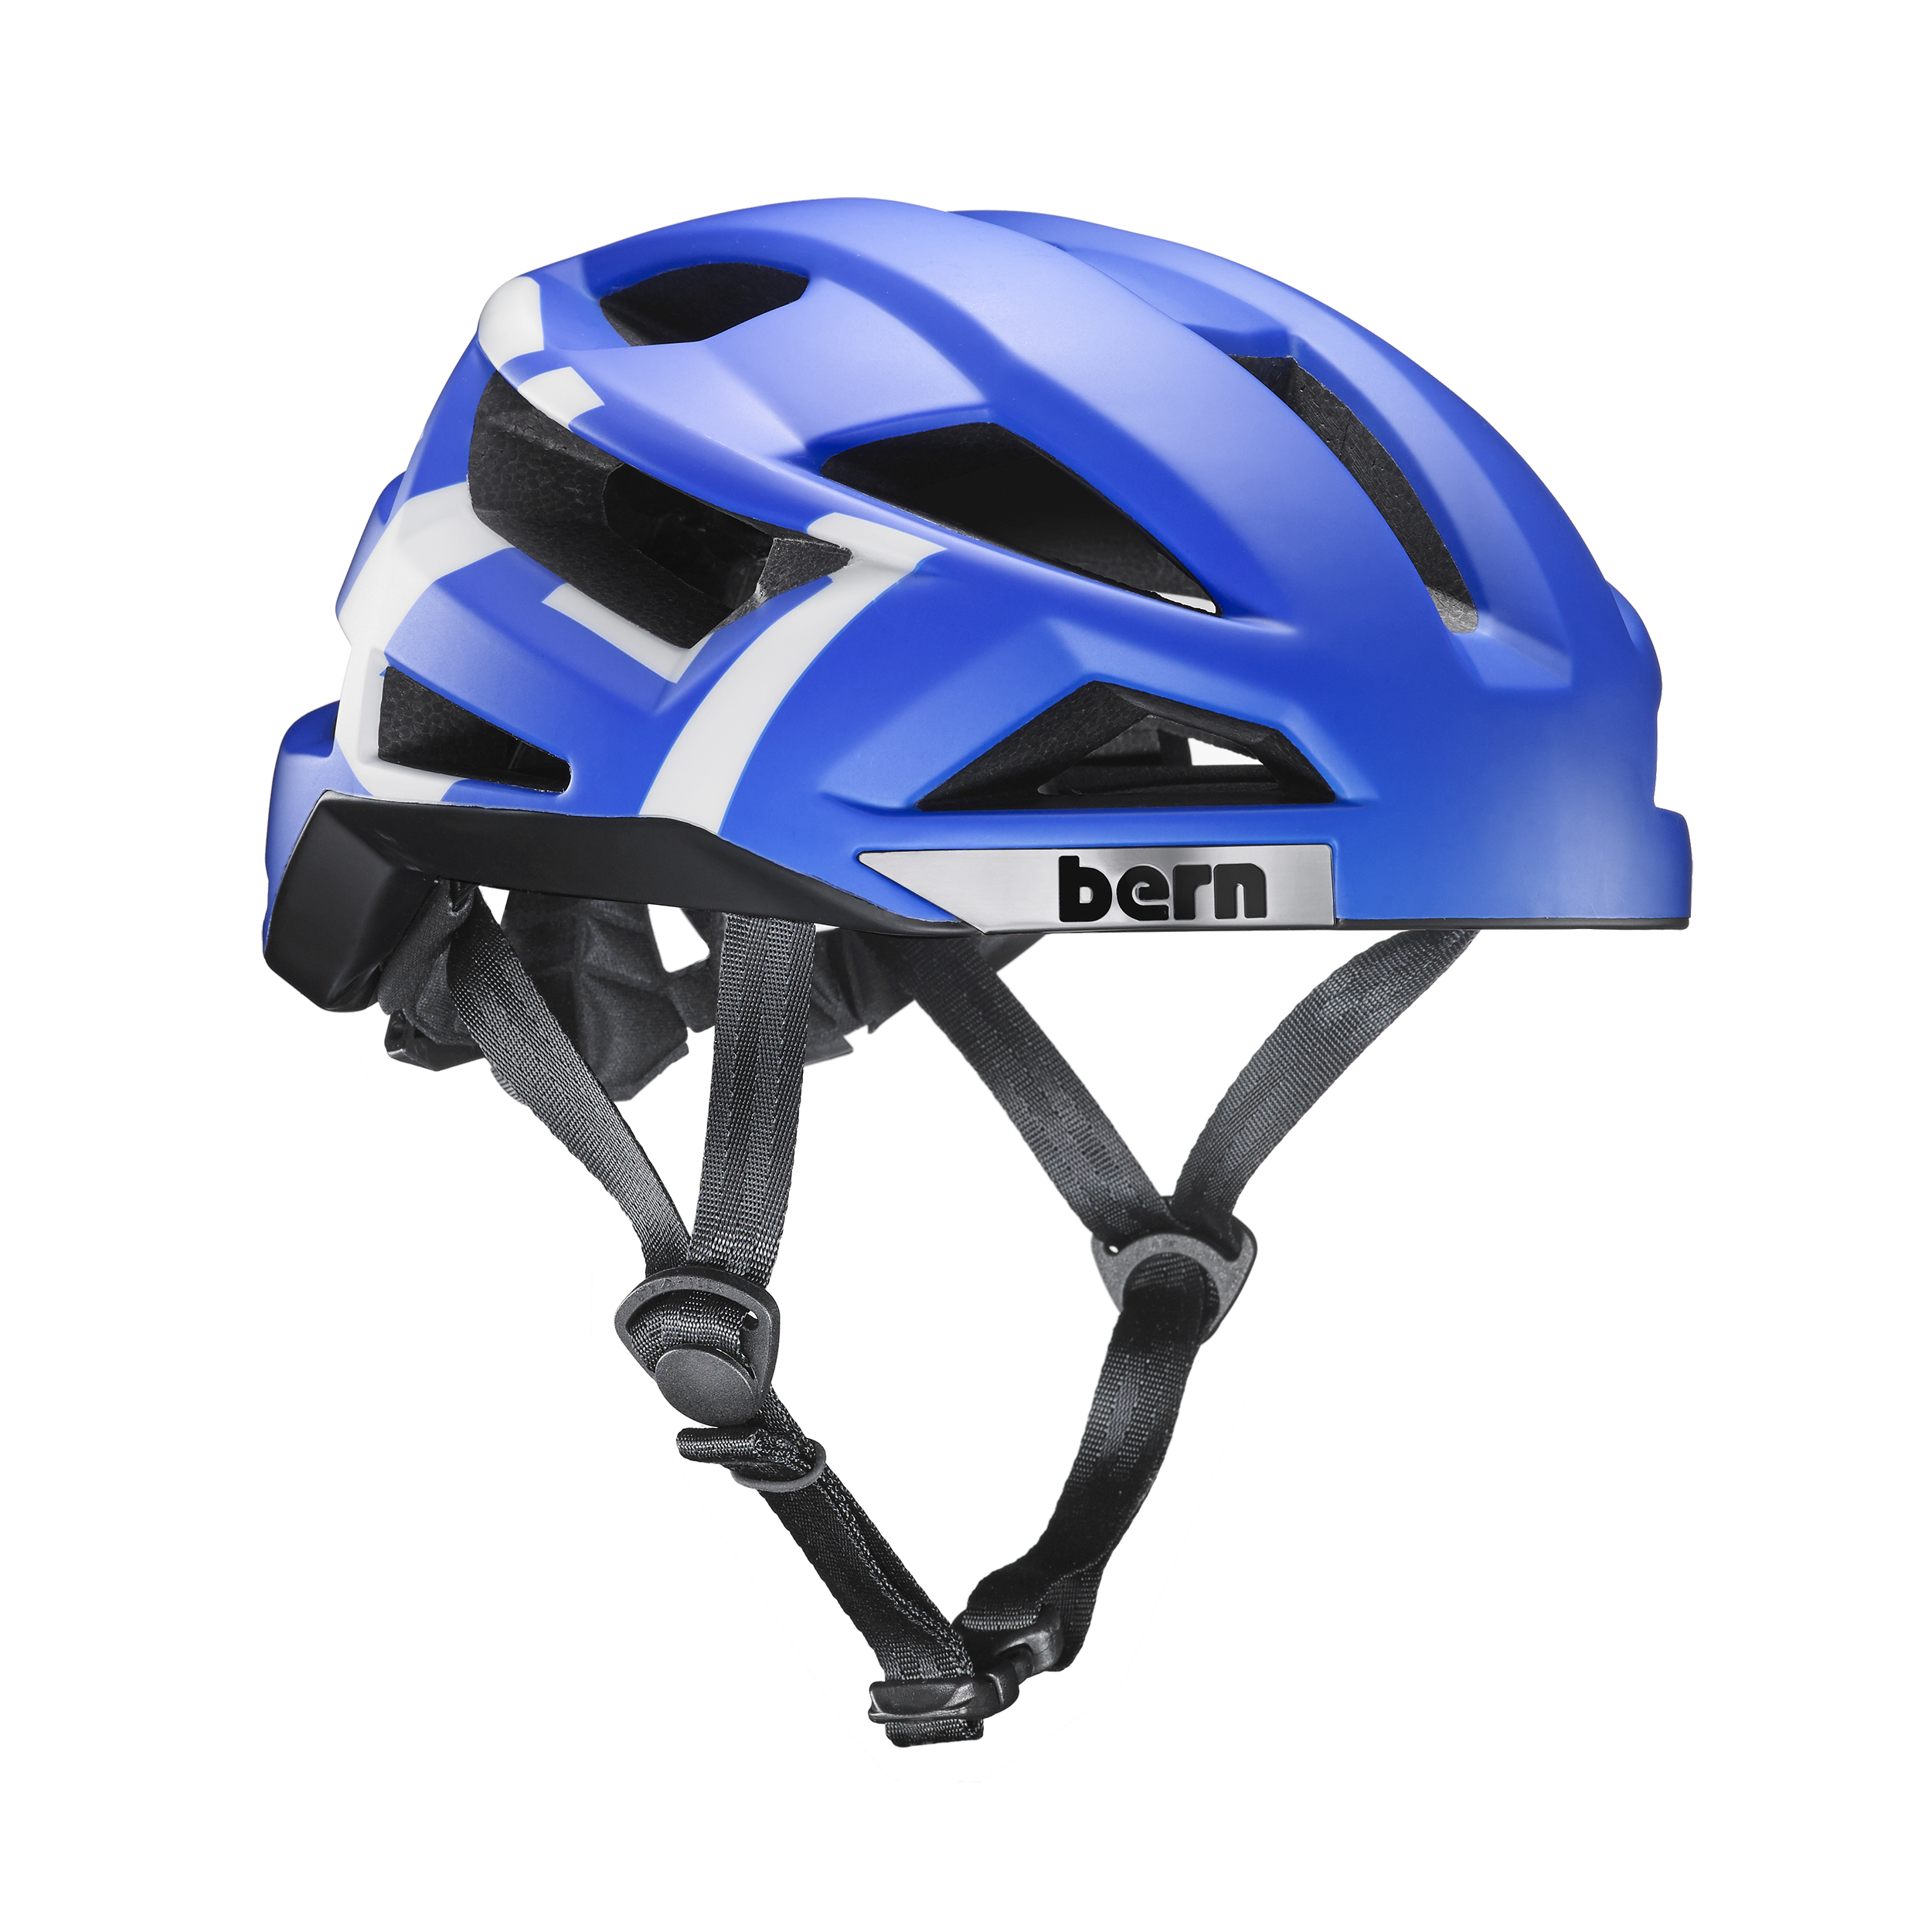 Bern FL-1 w/ MIPS - Bike Helmet | Bernunlimited.com